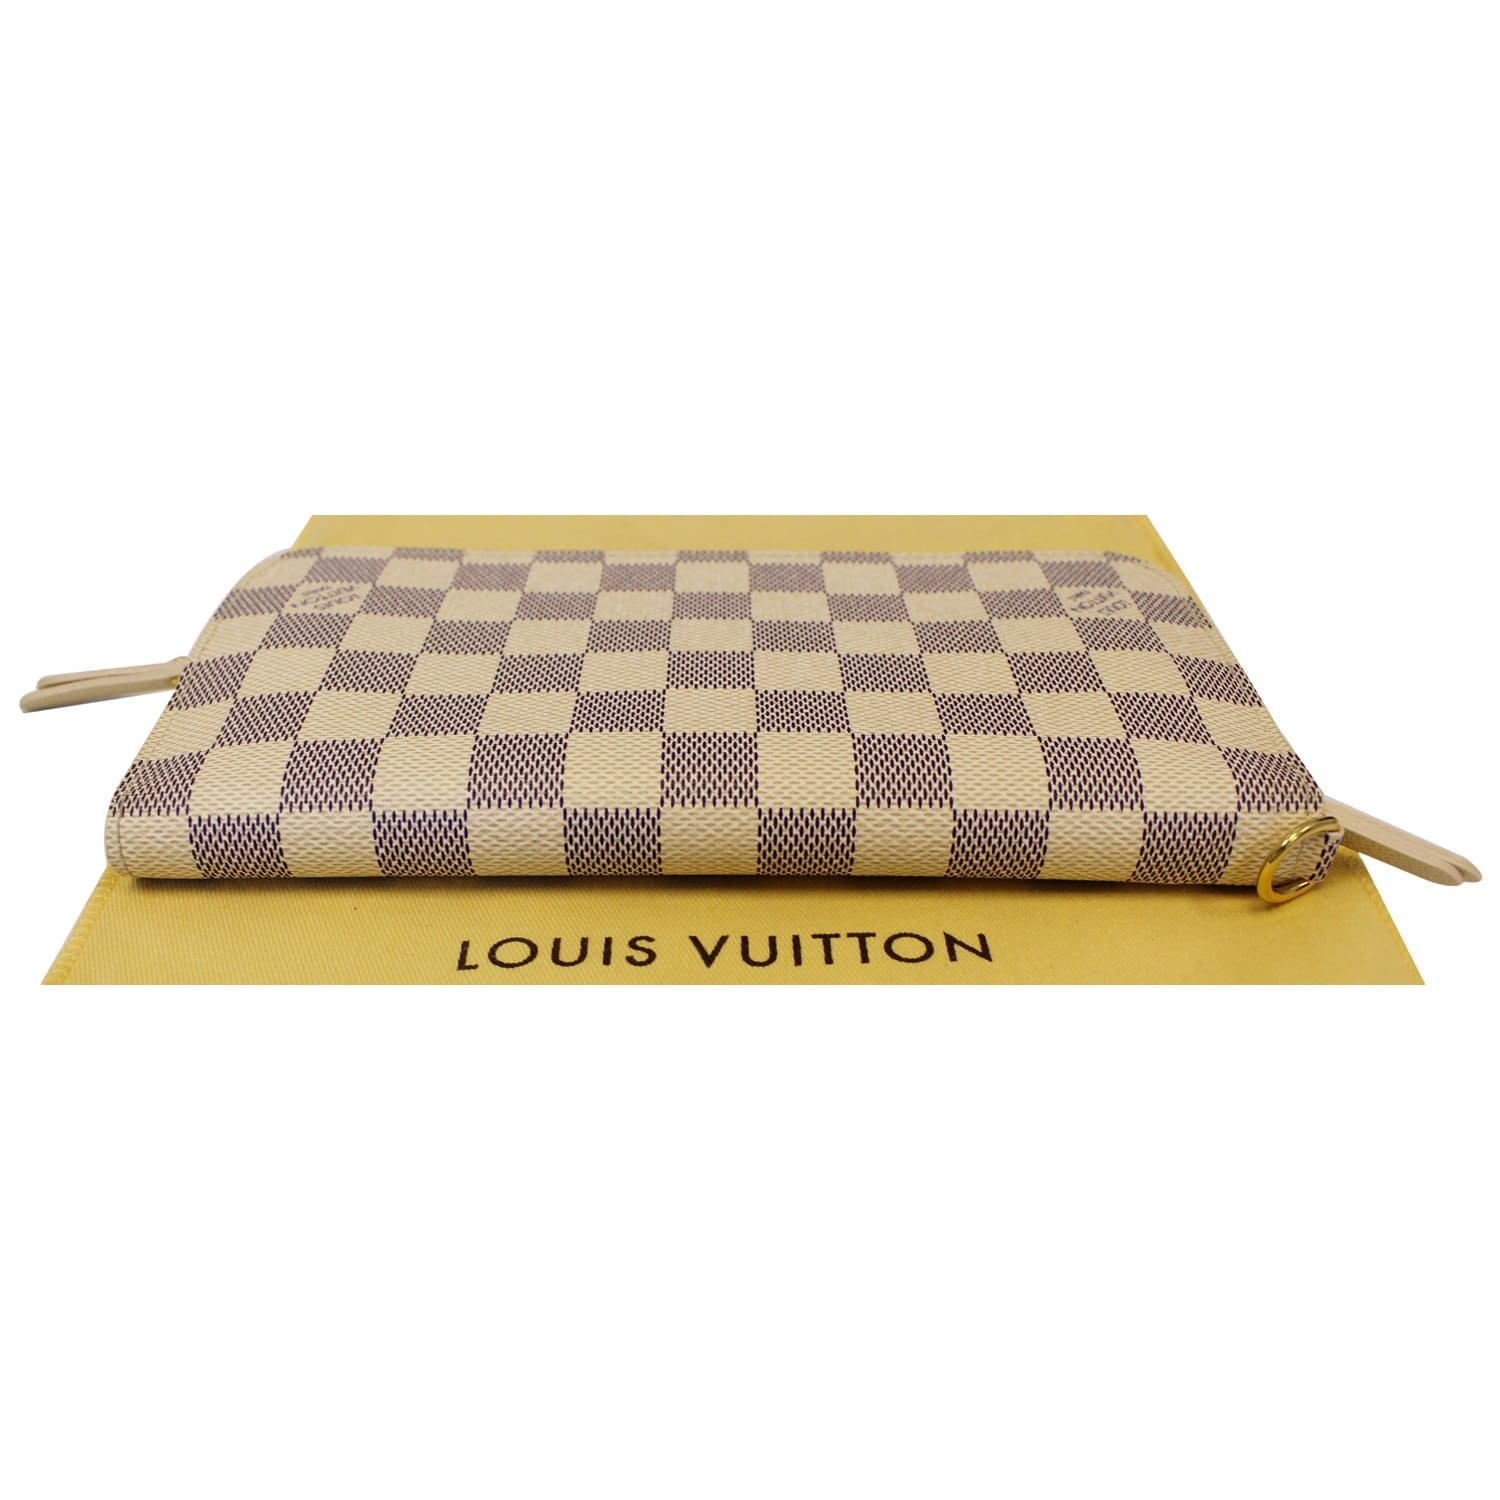 LOUIS VUITTON Insolite Damier Azur Wallet White